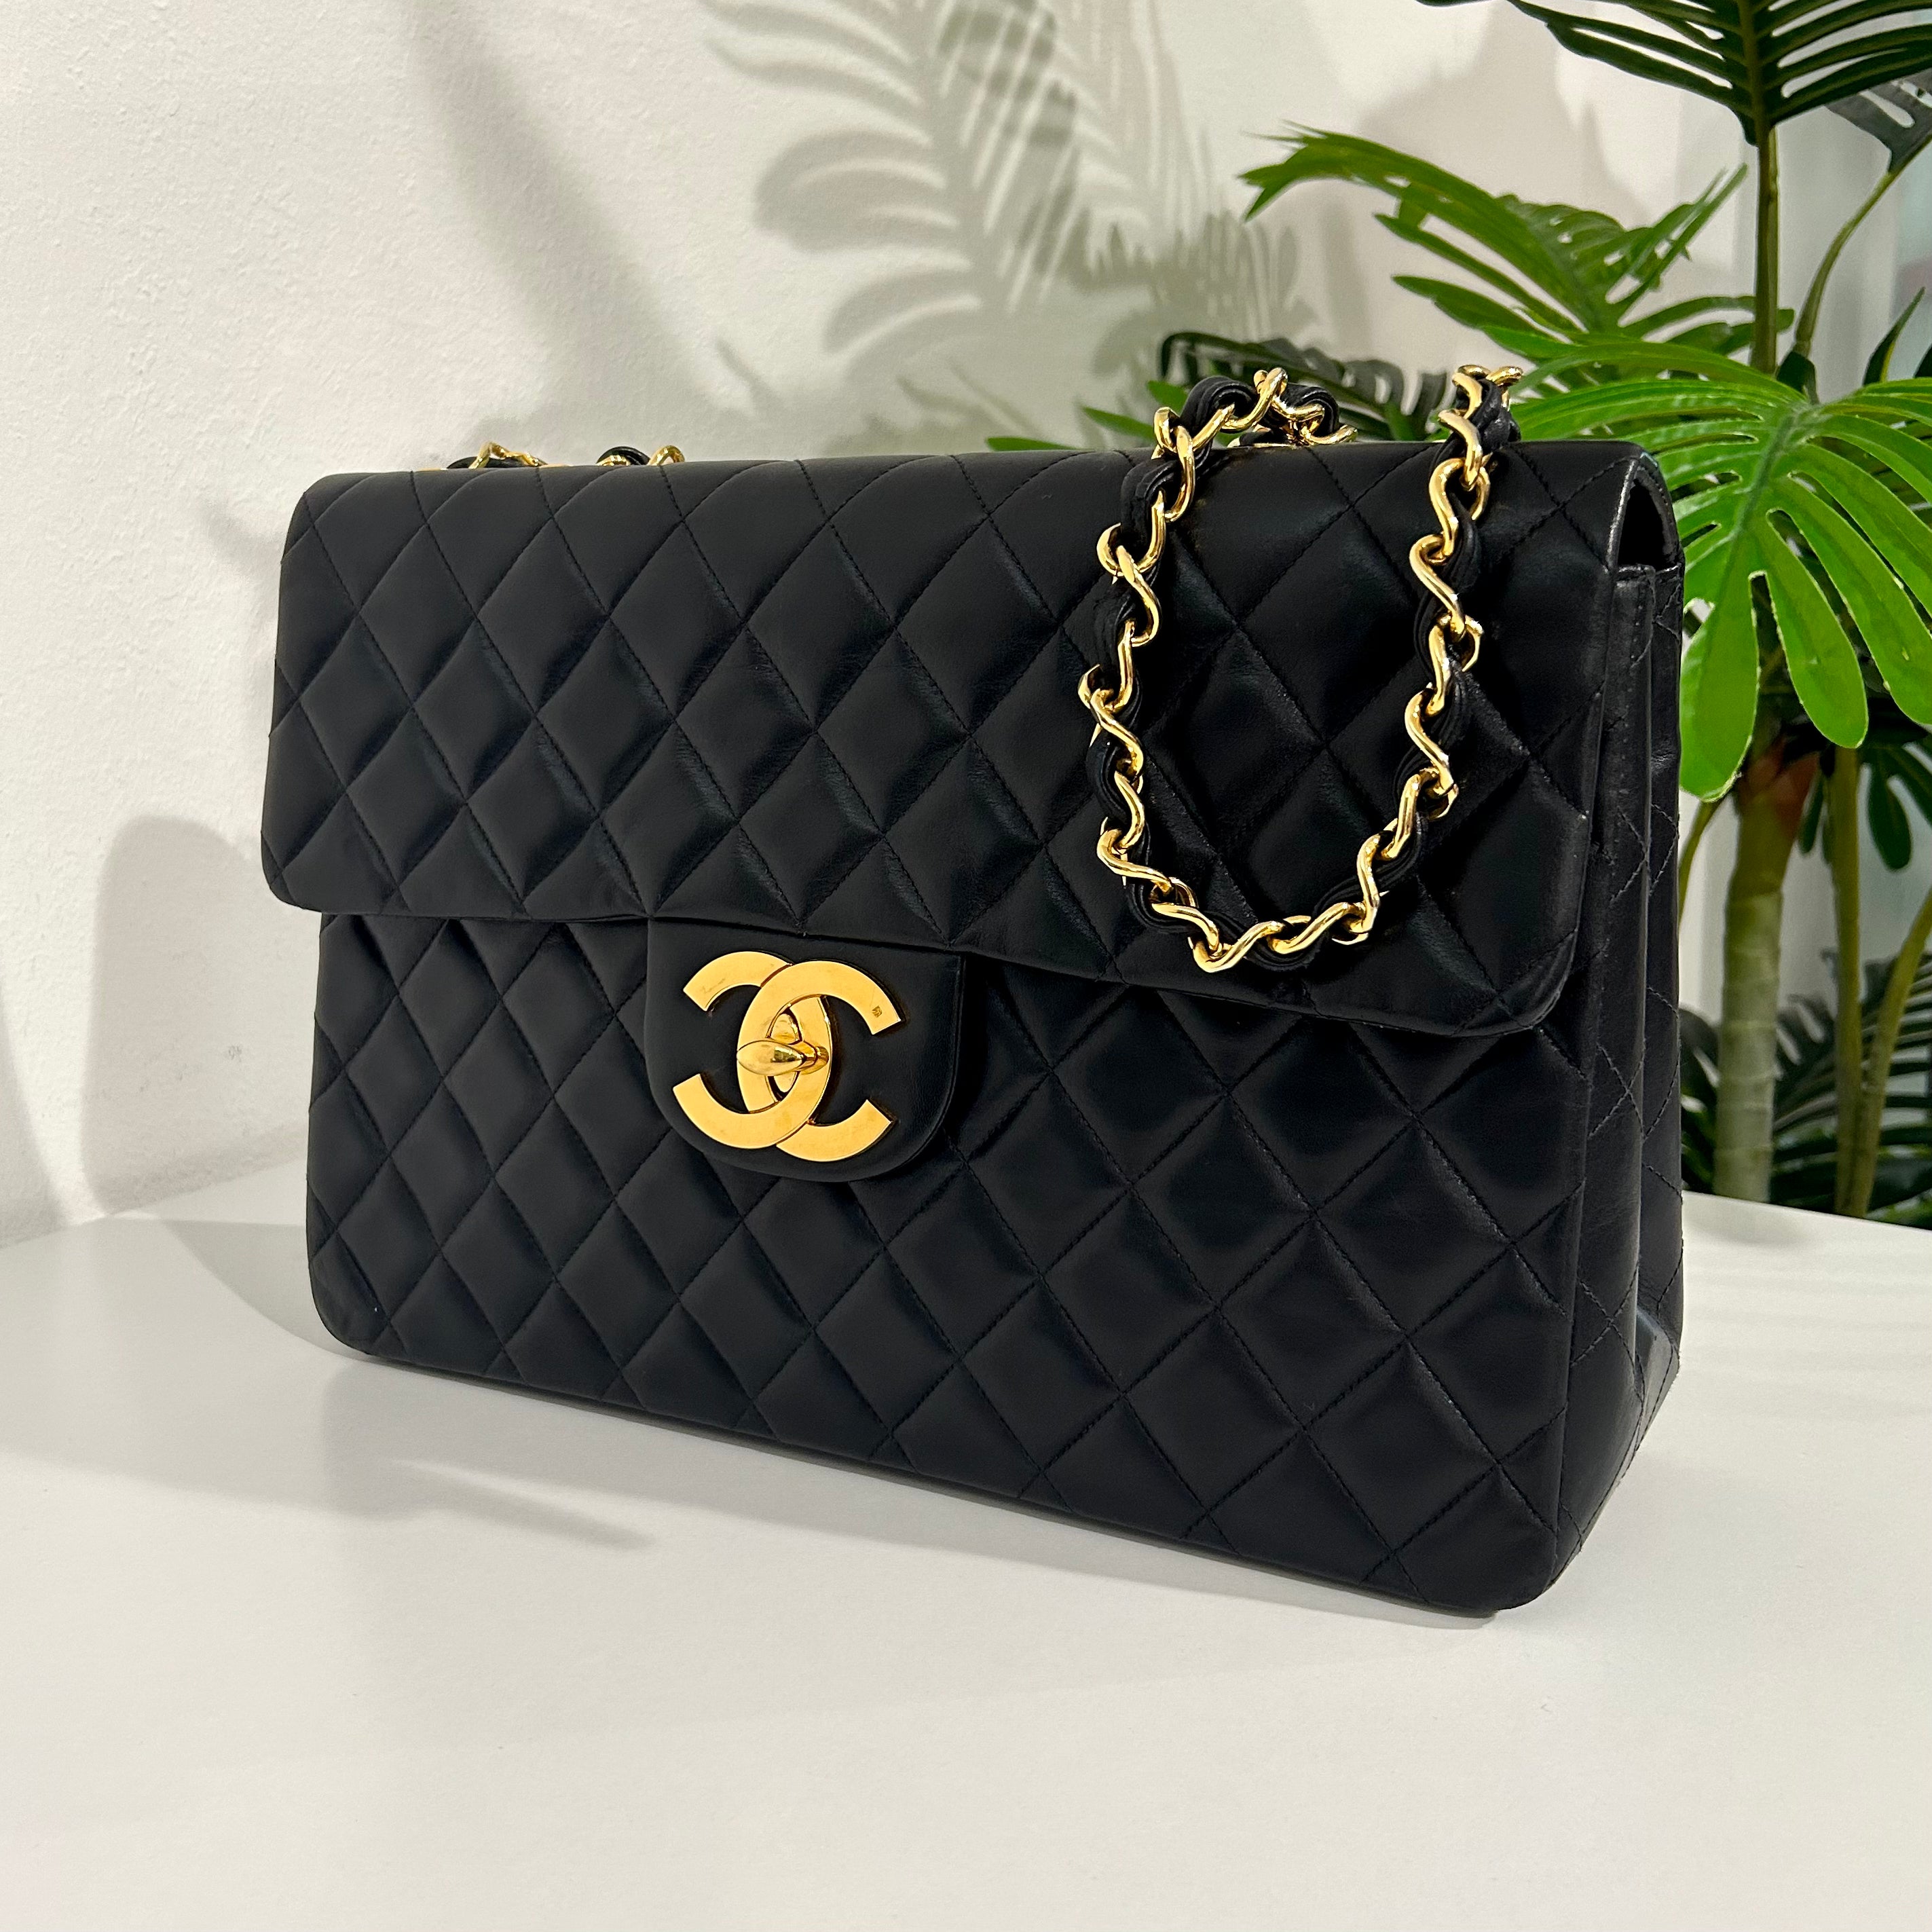 black chanel classic handbag